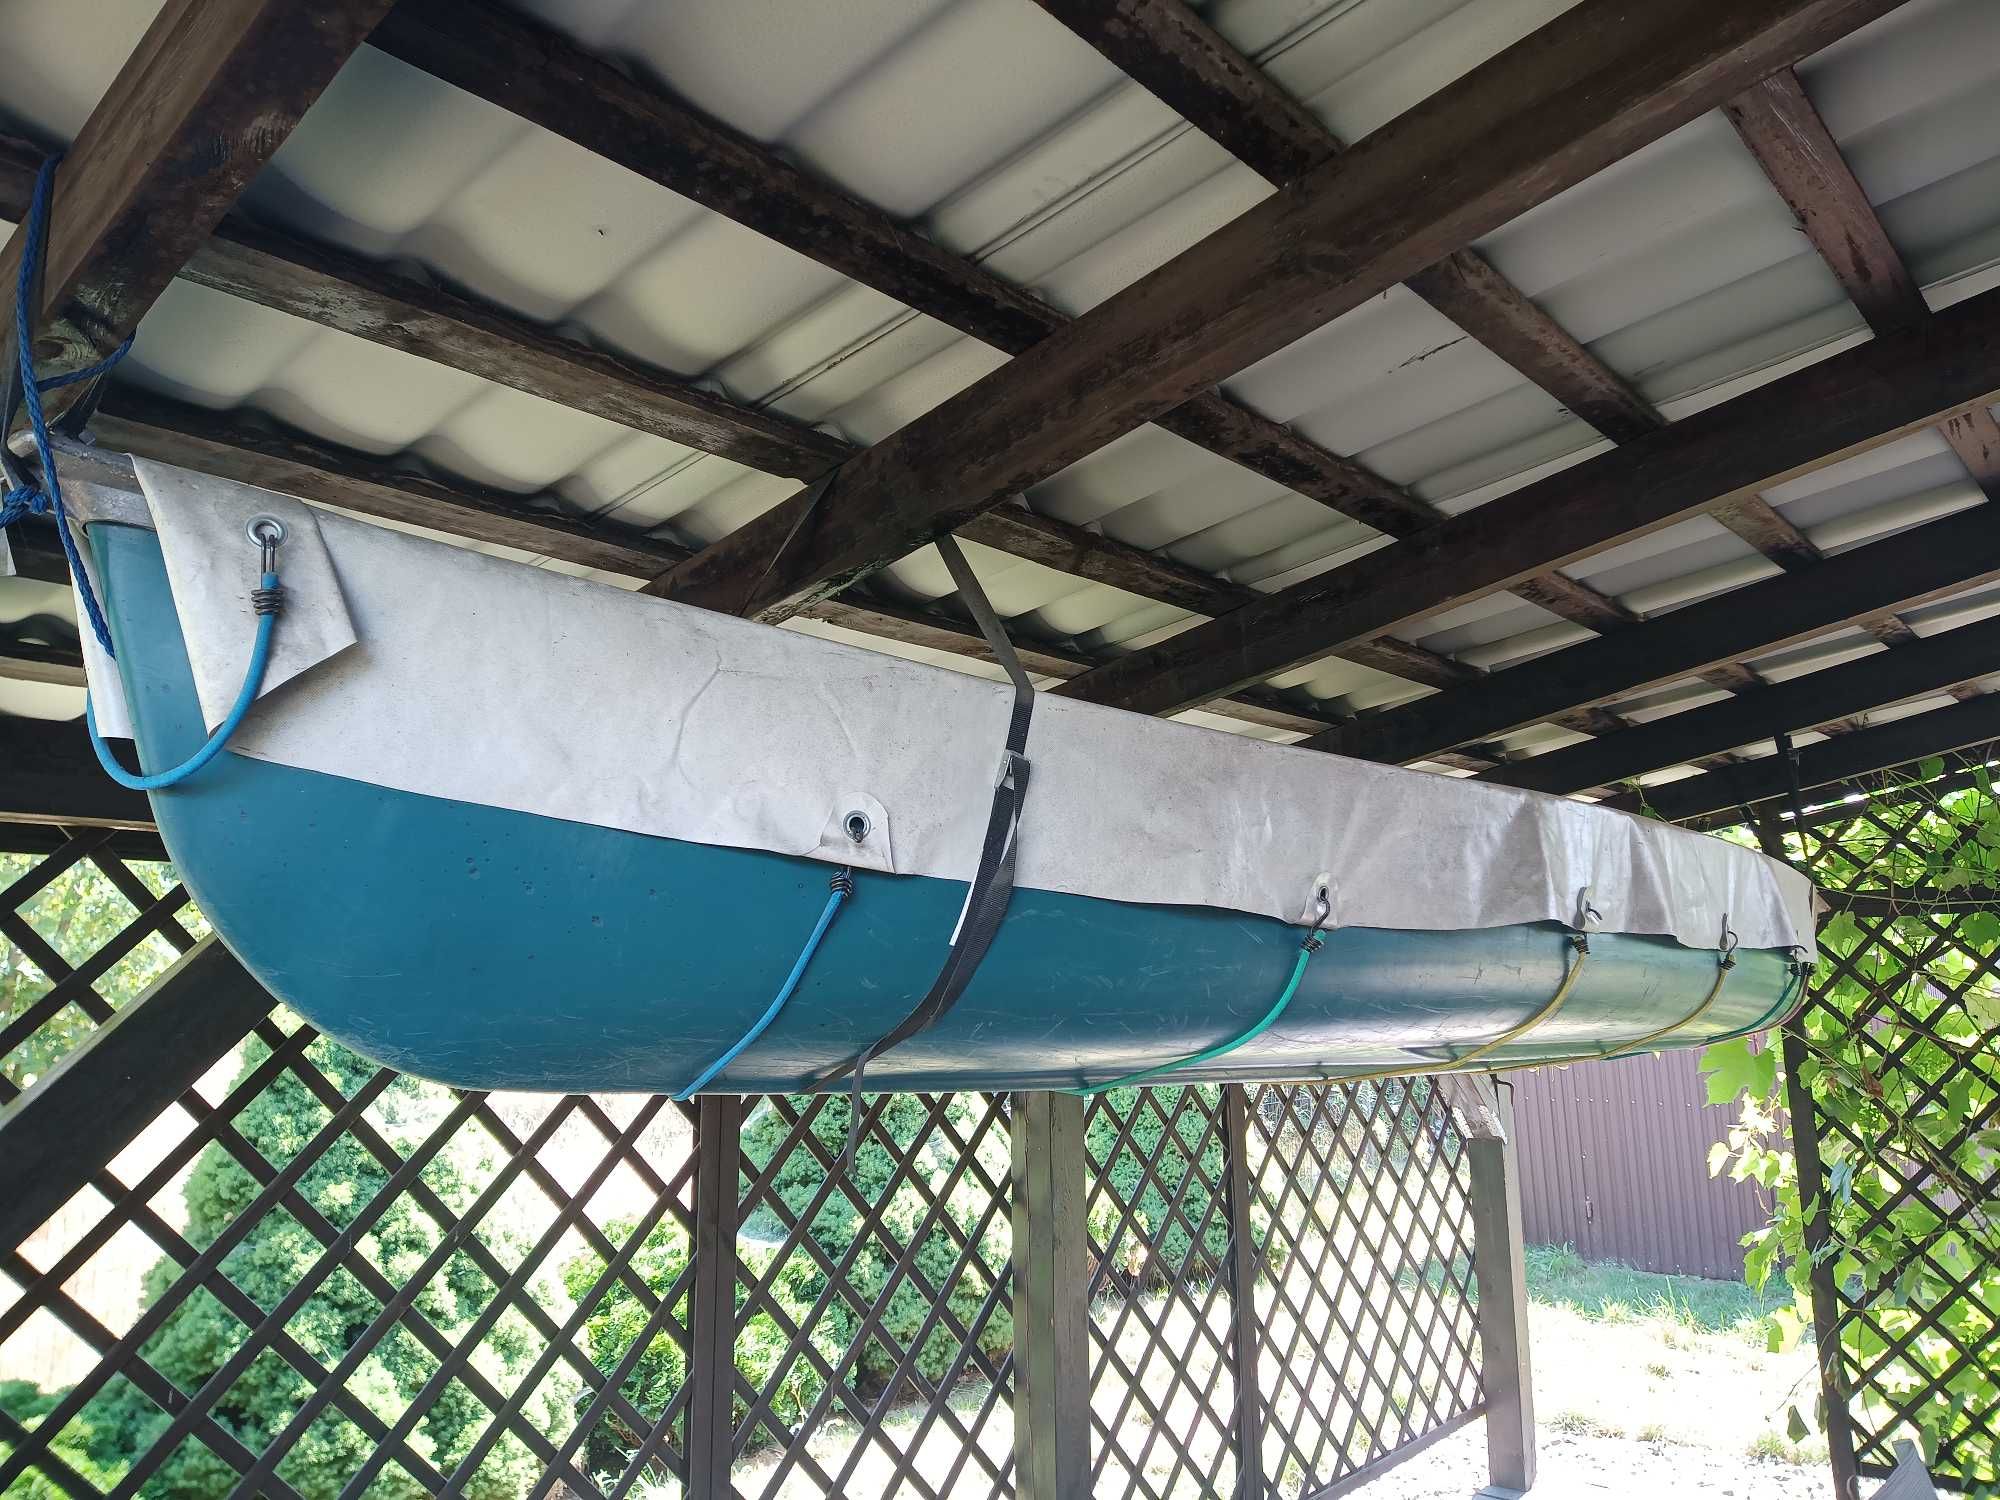 łódka coleman pawęż pod silnik 5km